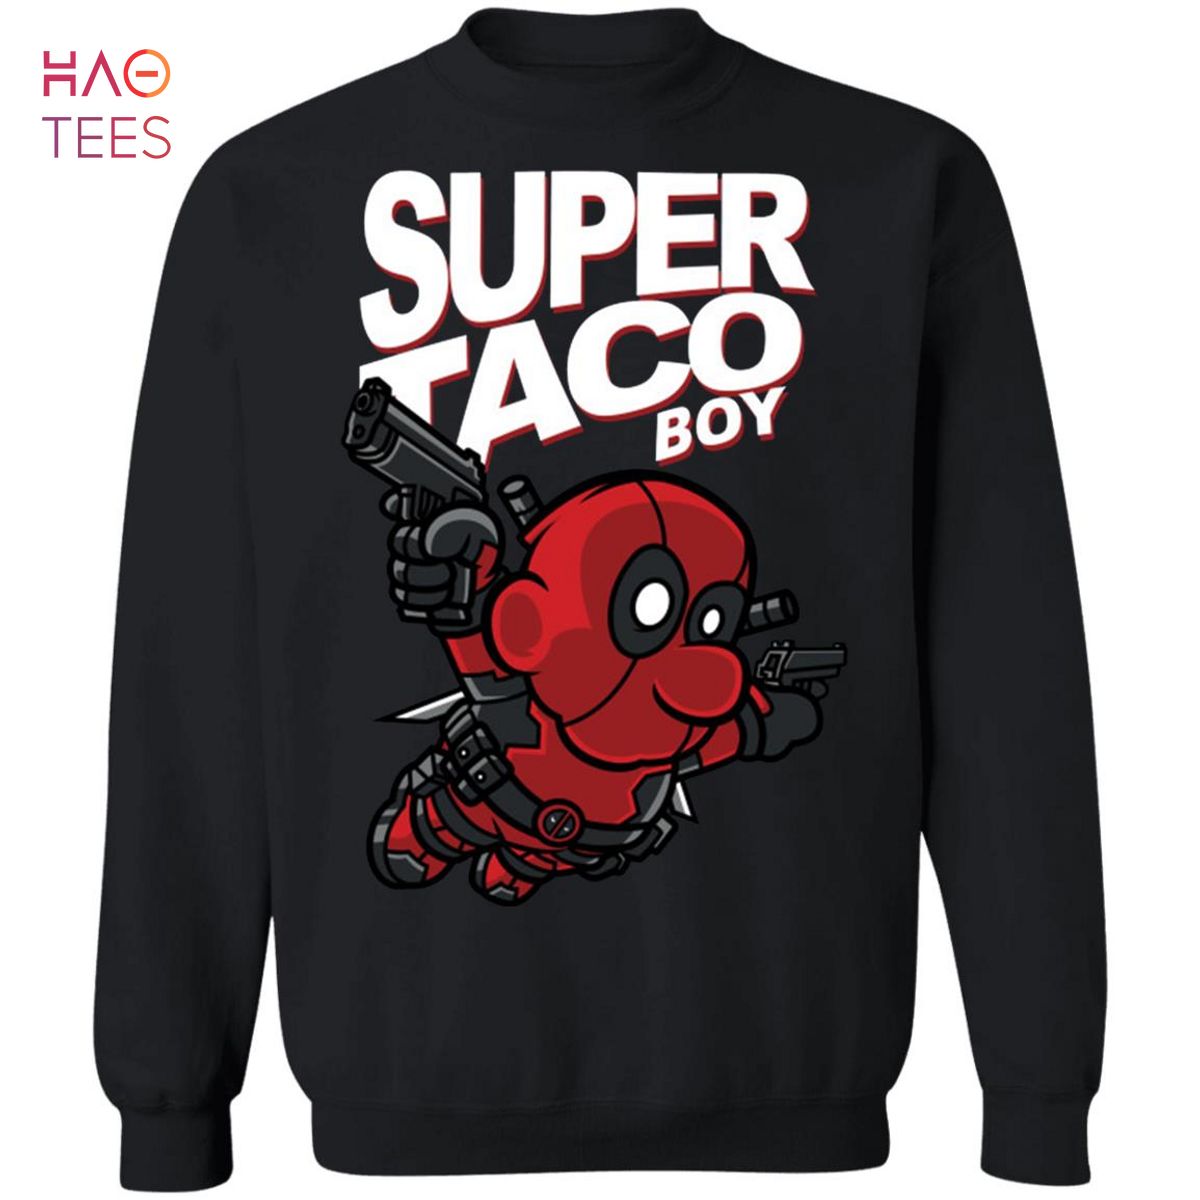 HOT Deadpool Taco Sweater Super Taco Boy